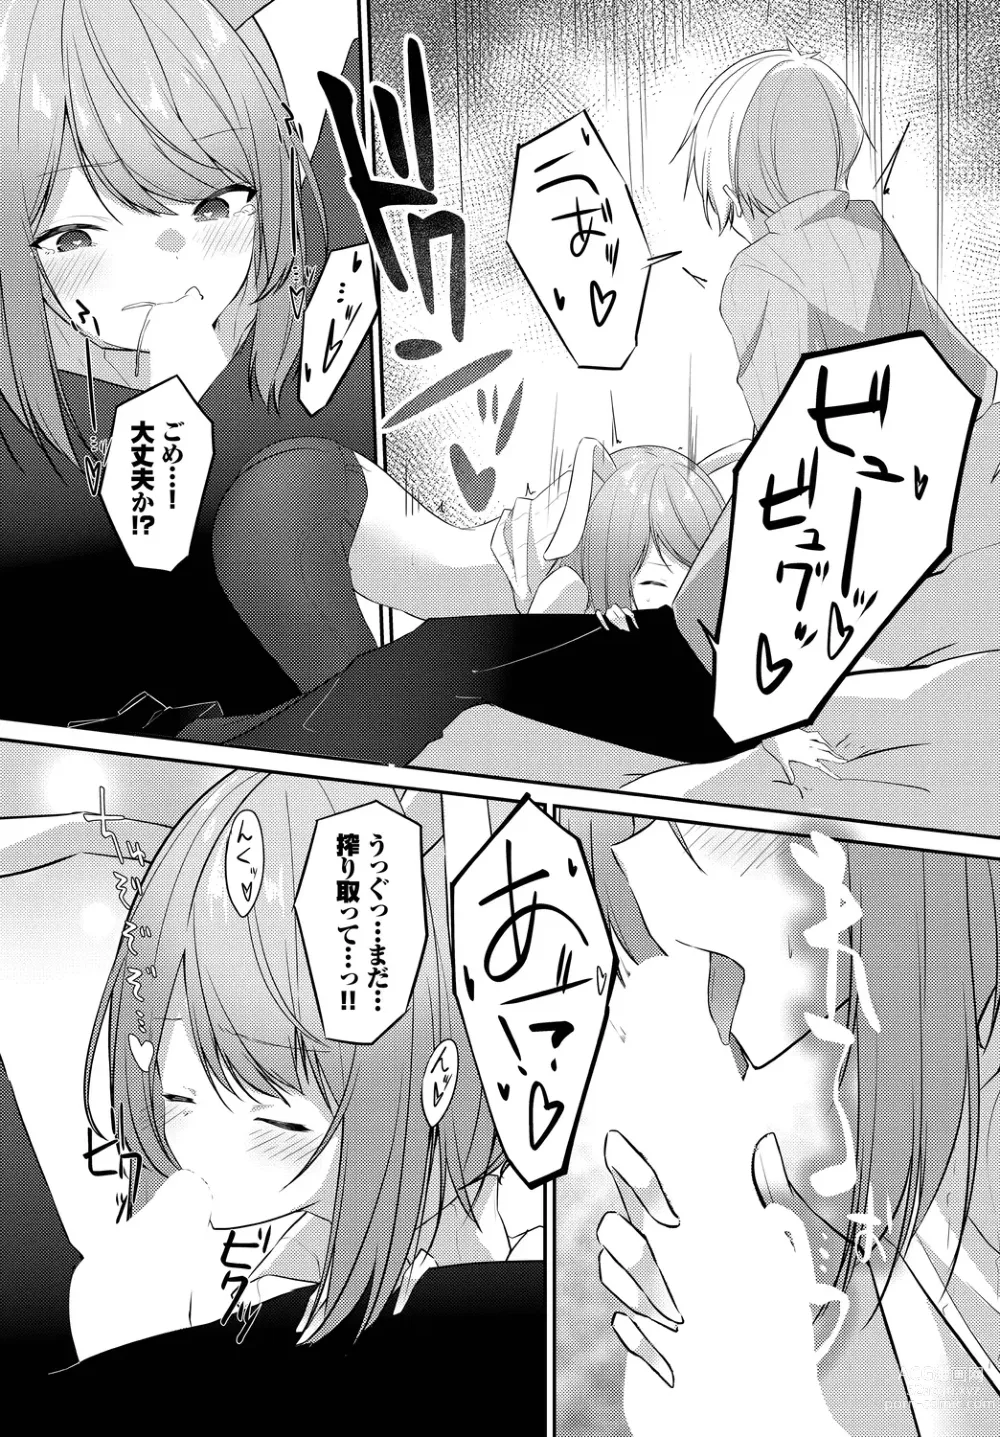 Page 152 of manga Meikyuu Lilac - Laberynth Lilac.